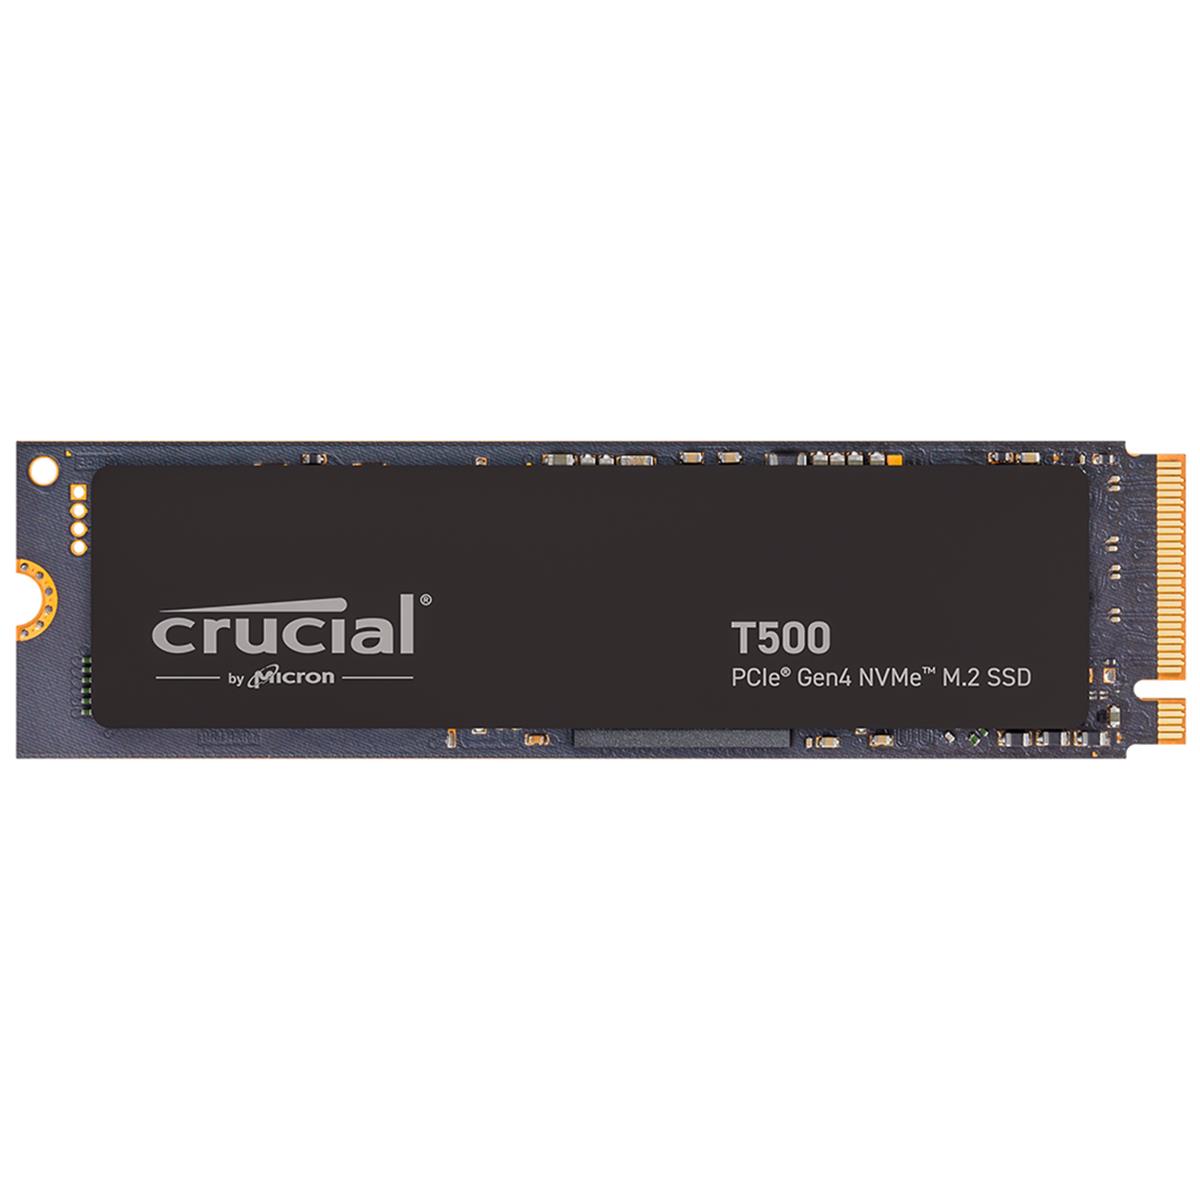 M.2 500GB Crucial T500 NVMe PCIe 4.0 x 4